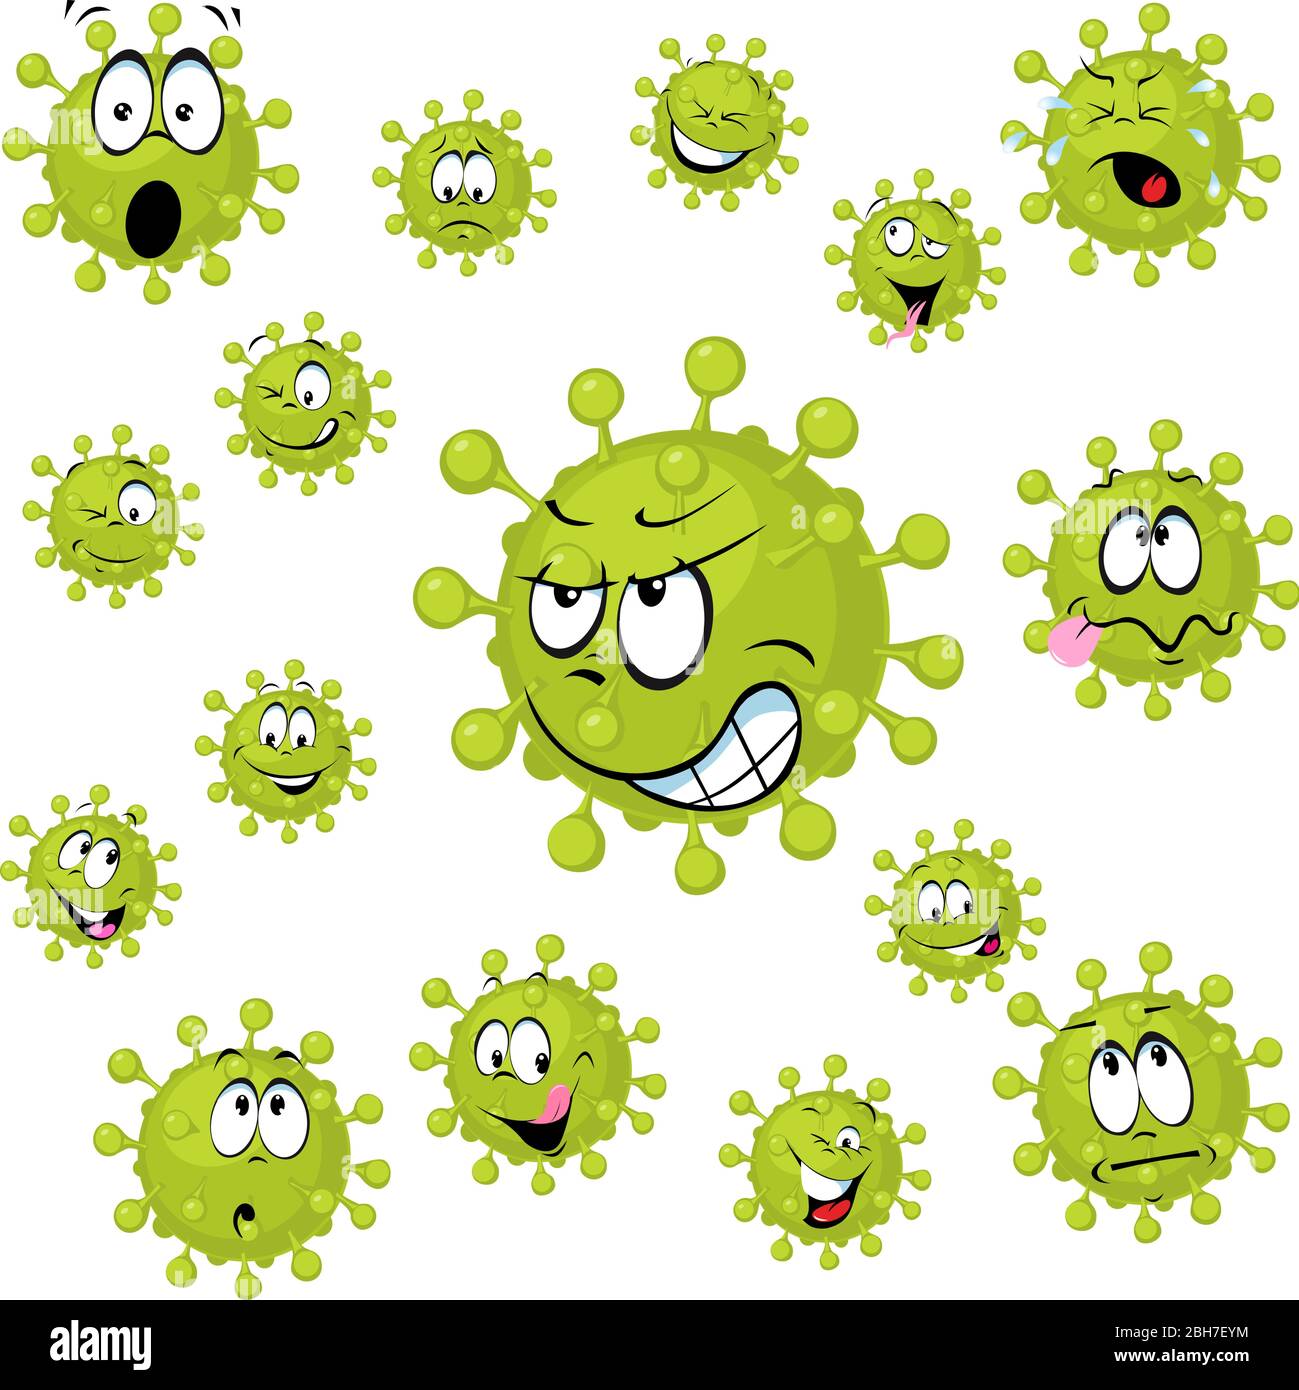 Corona Virus - COVID - 19 - Vector Illustration with Many Facial Expressions Stock Vector